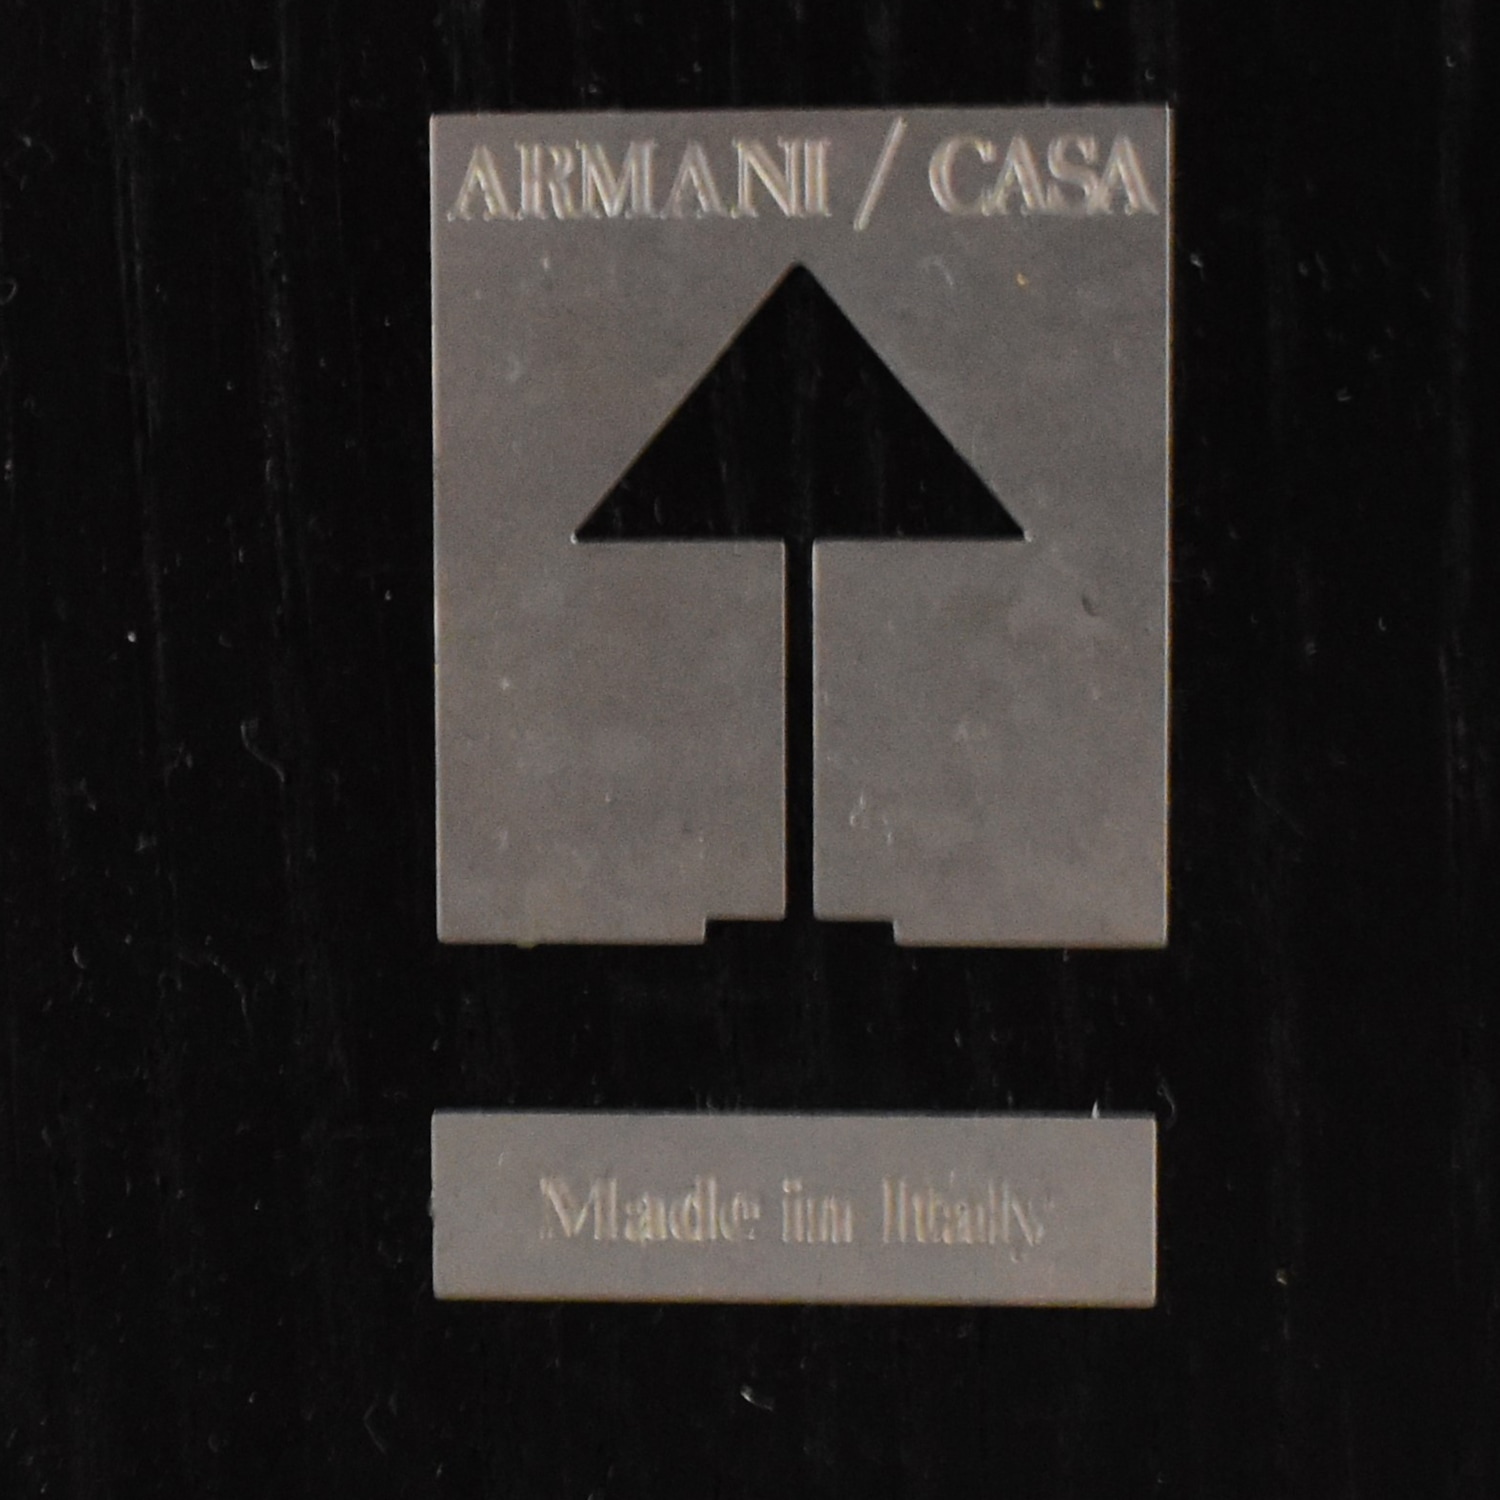 Brand Identity of Armani, PDF, Logos